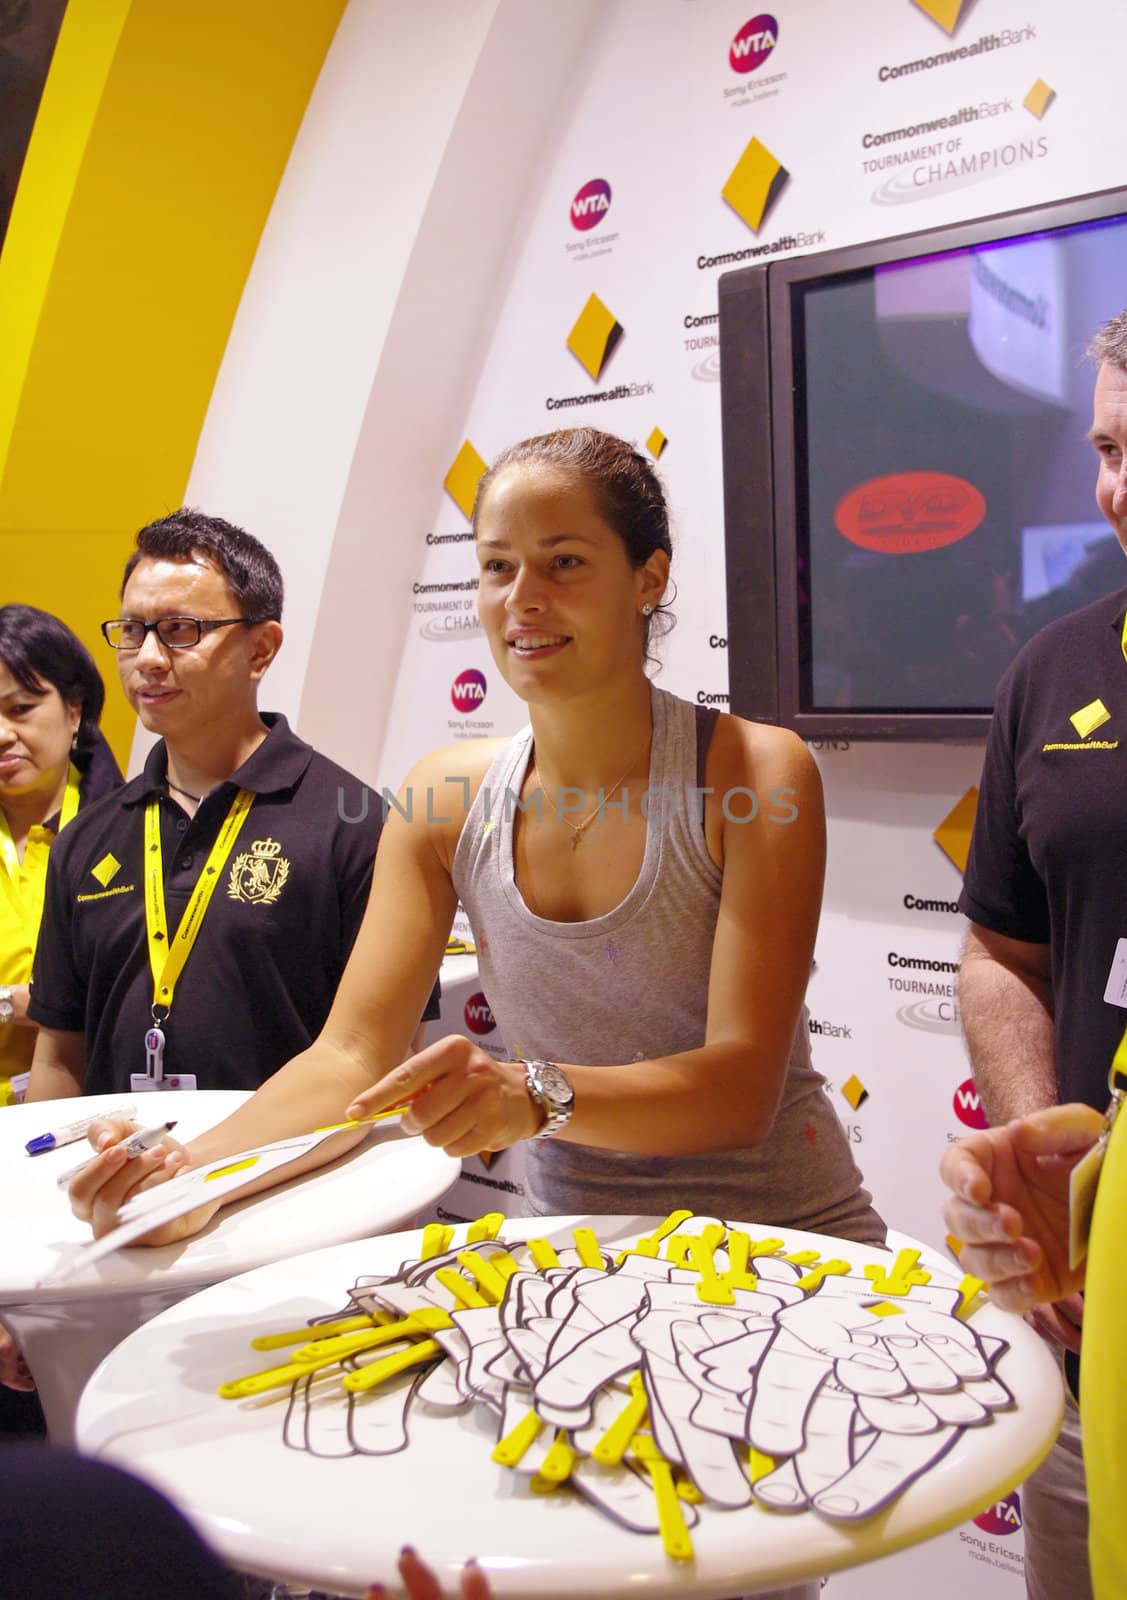 Ana Ivanovic autograph signing by Komar